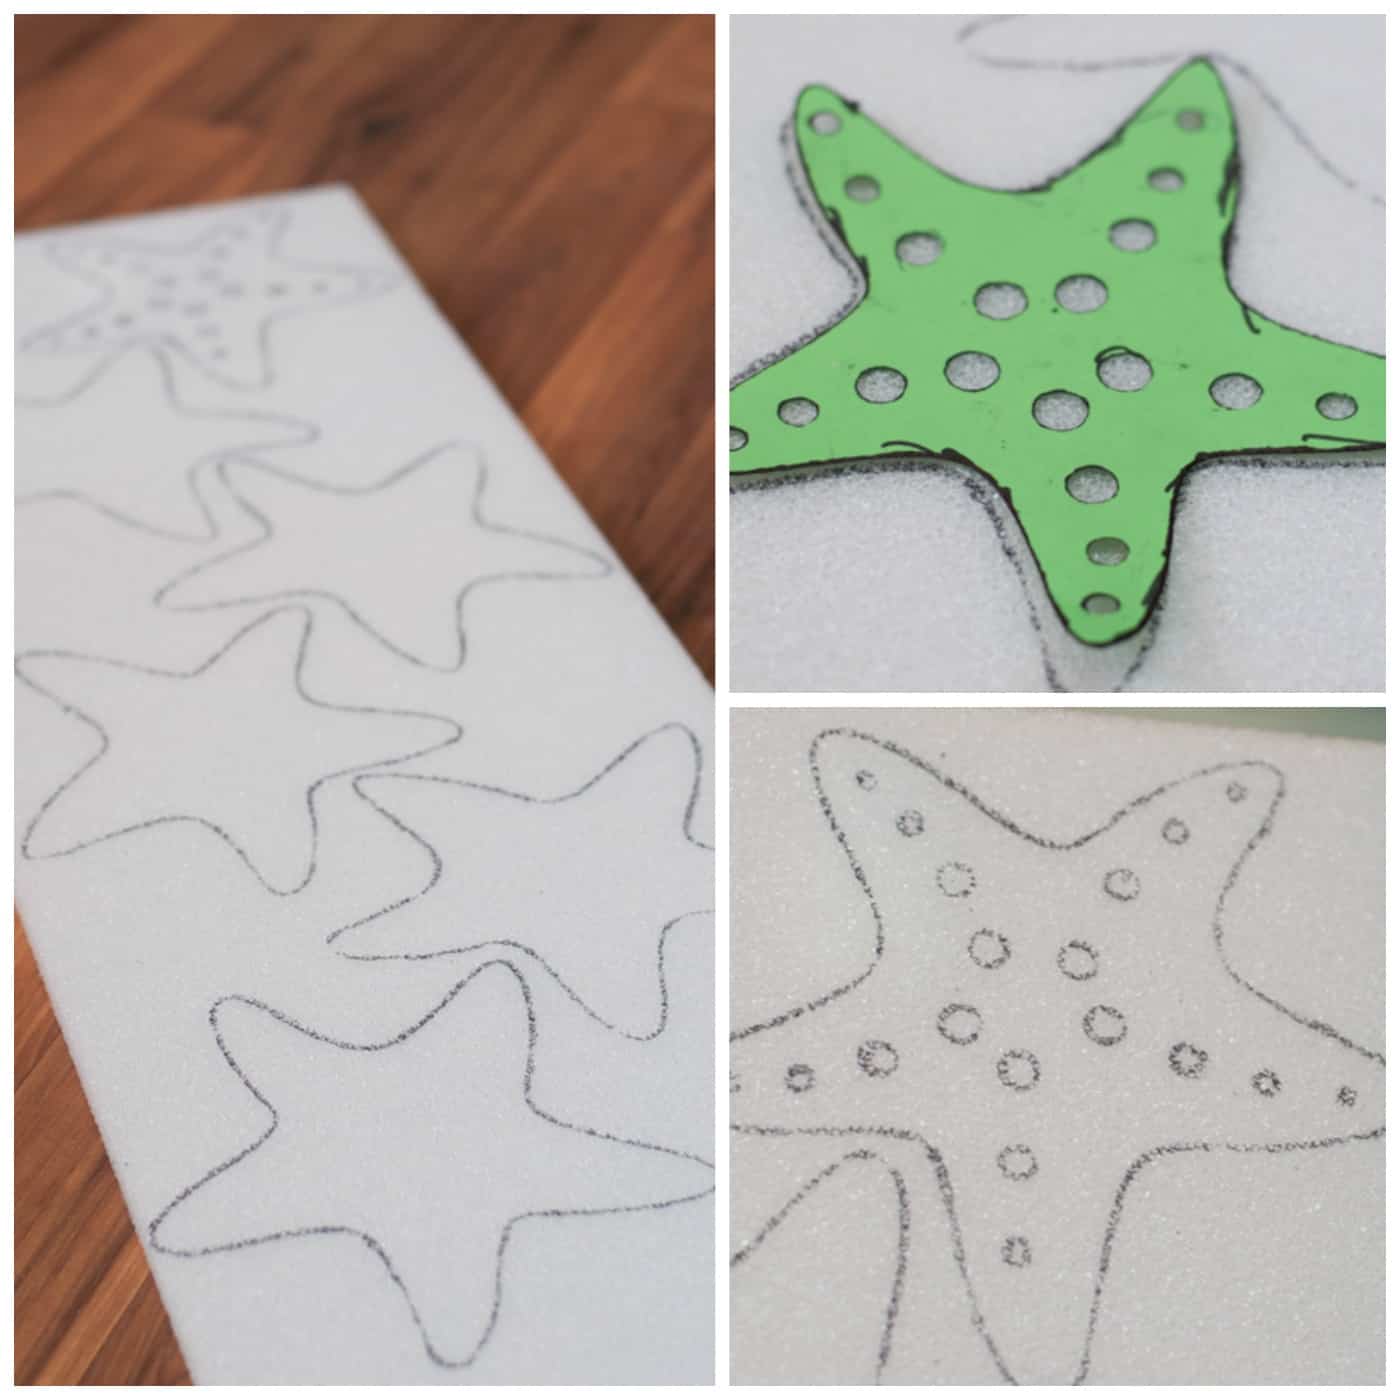 Tracing a starfish shape onto craft foam using a pen